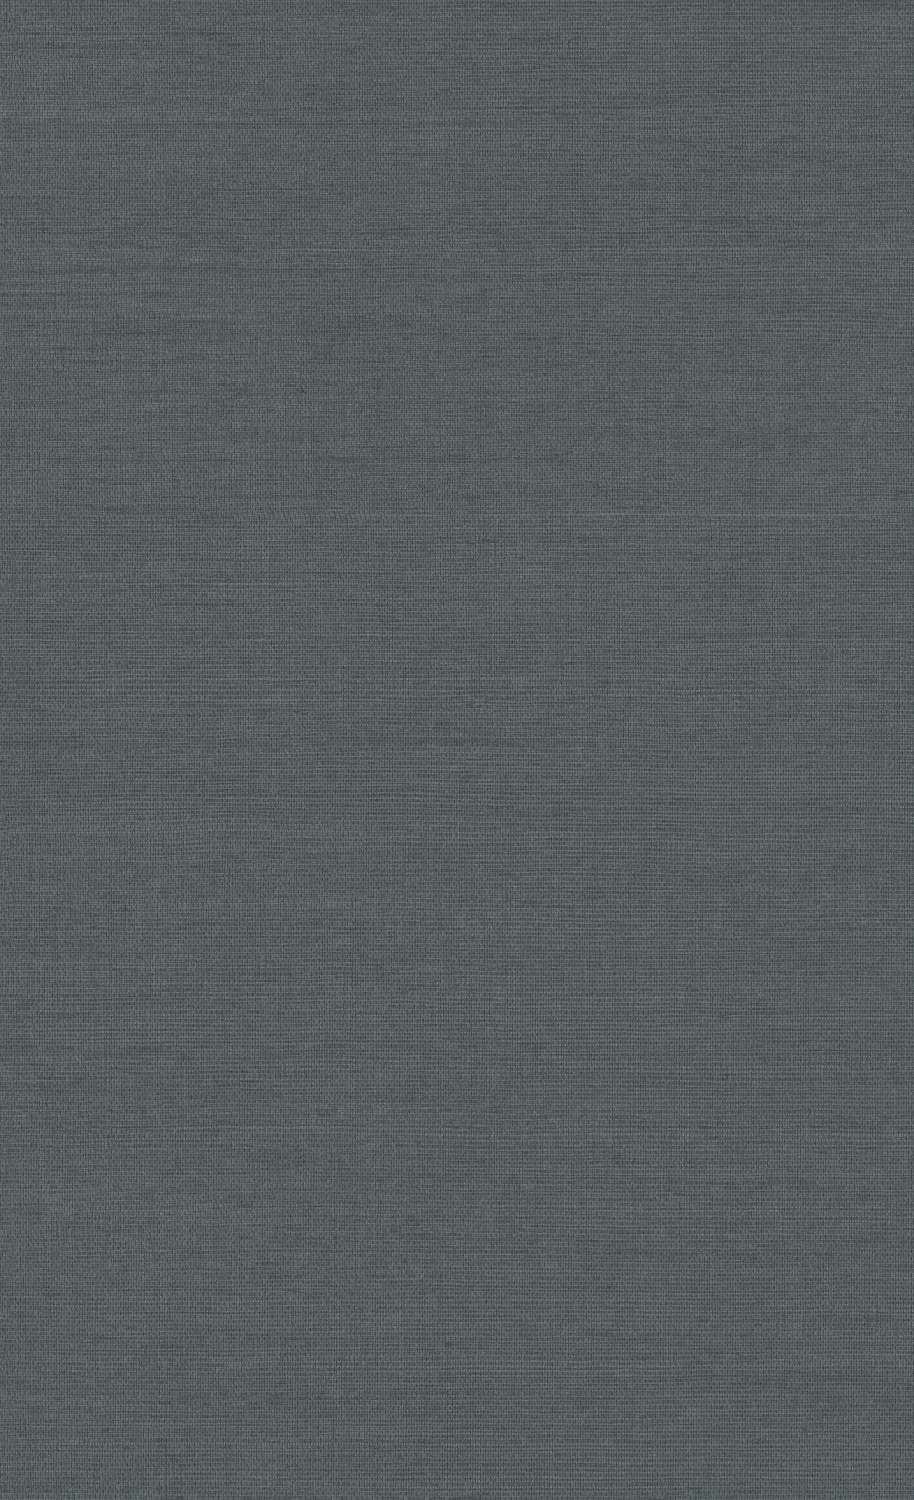 Plain Dark Grey Textured Wallpaper C7265. Commercial wallpaper. Vinyl Wall covering. Hospitality wallpaper. 